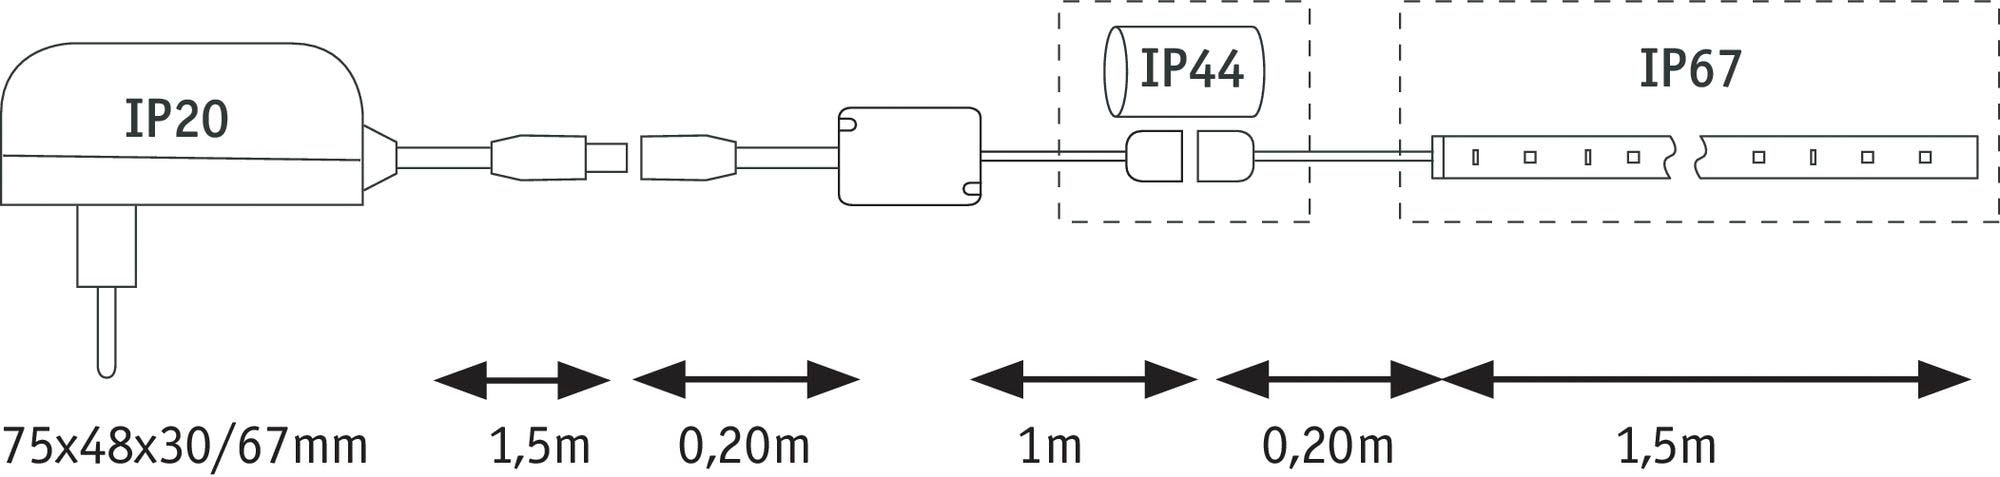 Paulmann LED-Streifen »MaxLED Flow Basisset 1,5m RGB 13,5W«, inkl. Funk-Fernbedienung